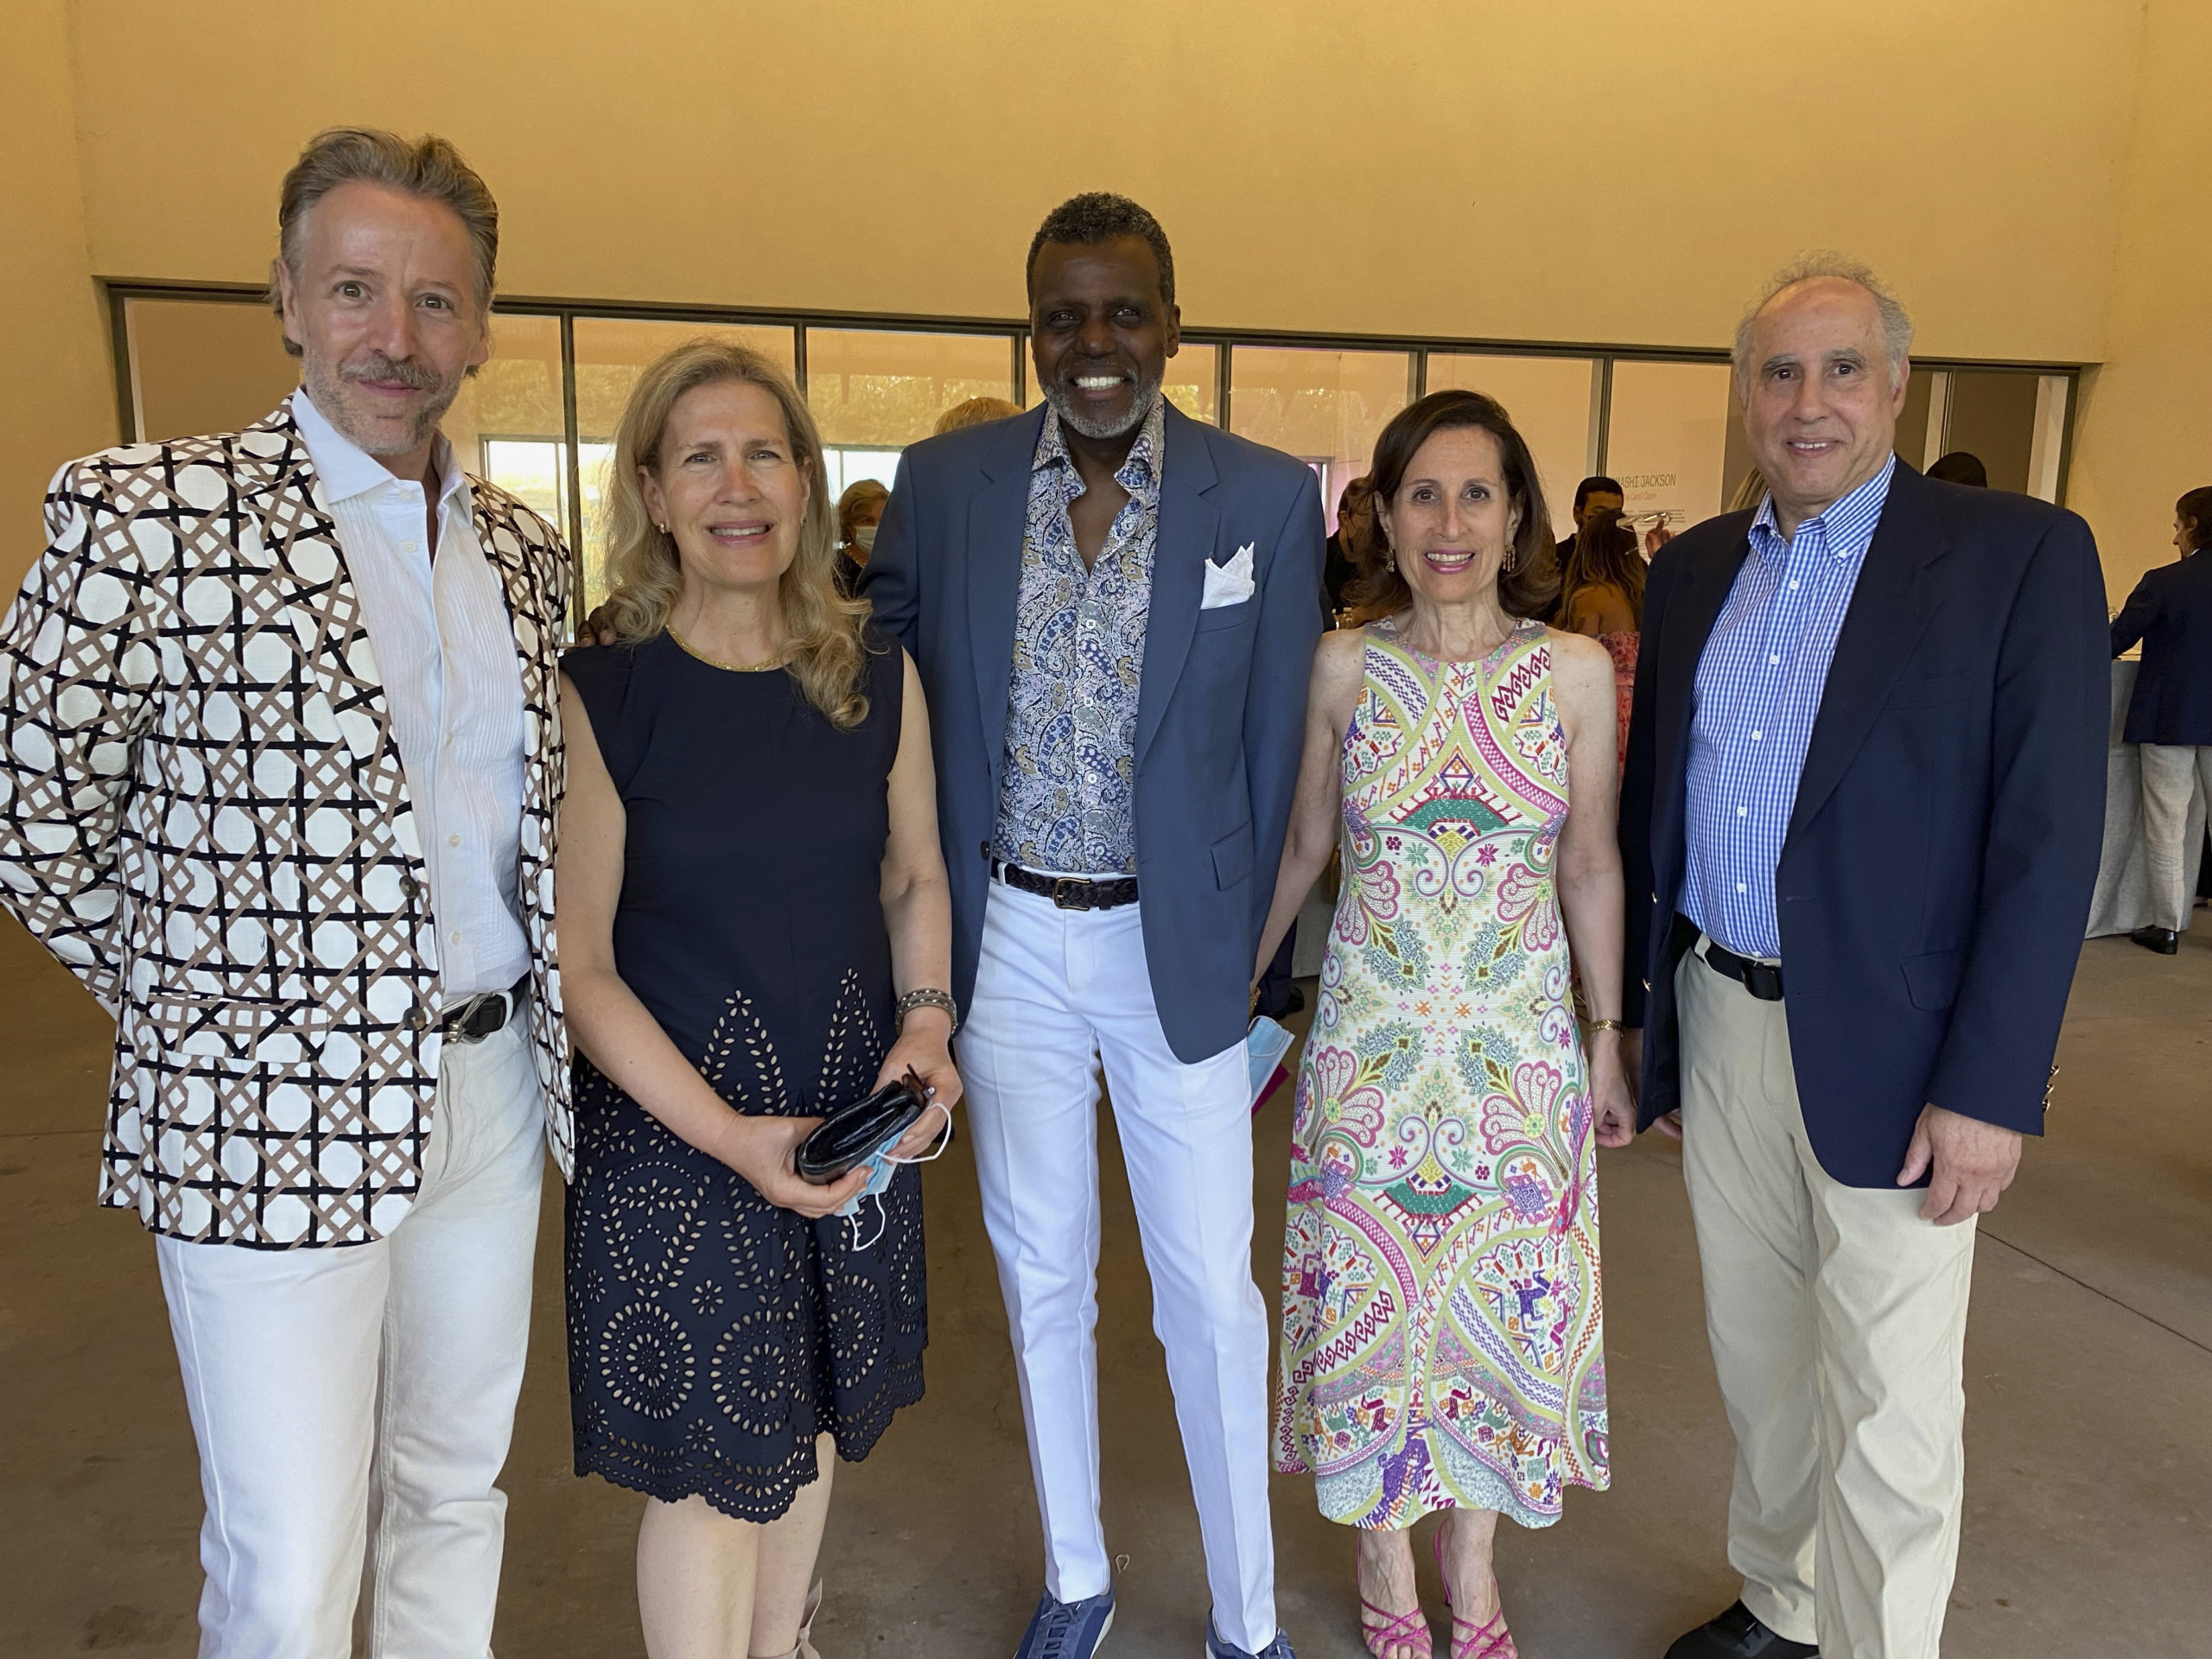 David Gomez Pearlberg, Mara Friedman, Mark Ingram, Patti Renton and Ira Friedman at the Parrish Art Museum Gala.